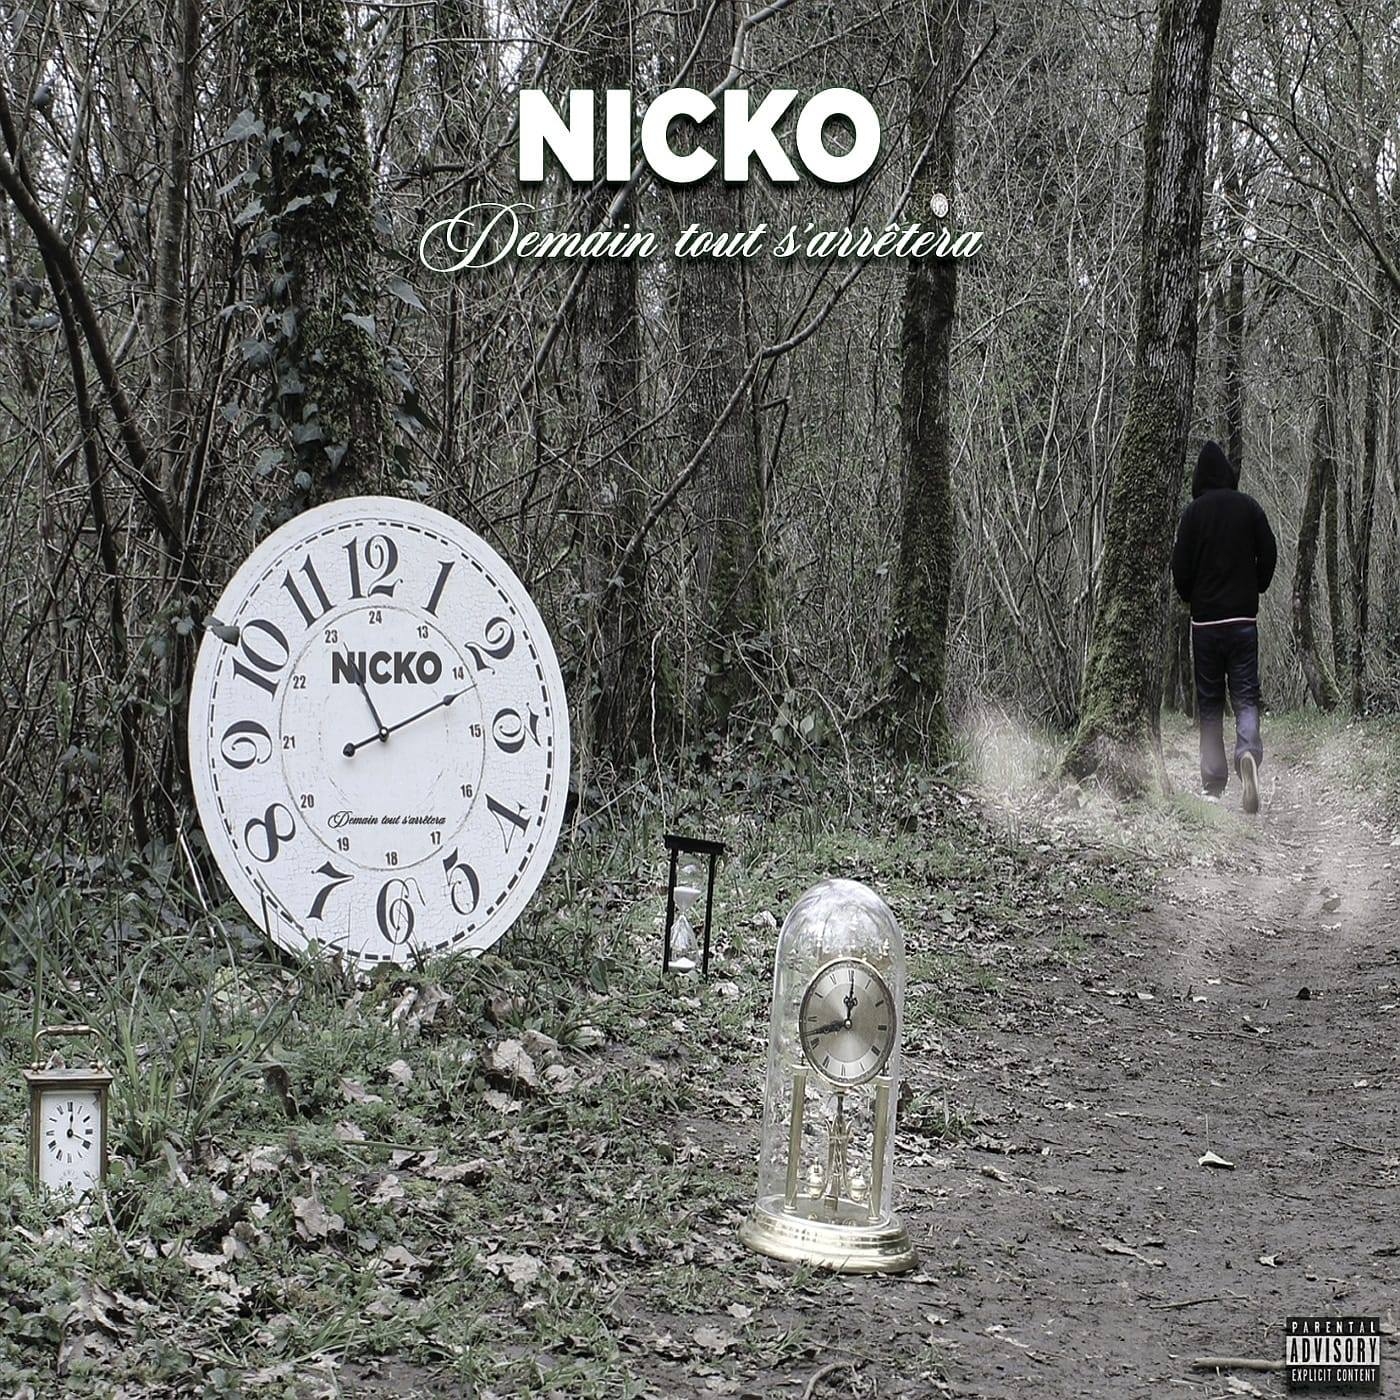 Album CD Nicko - Demain tout s'arretera de sur Scredboutique.com